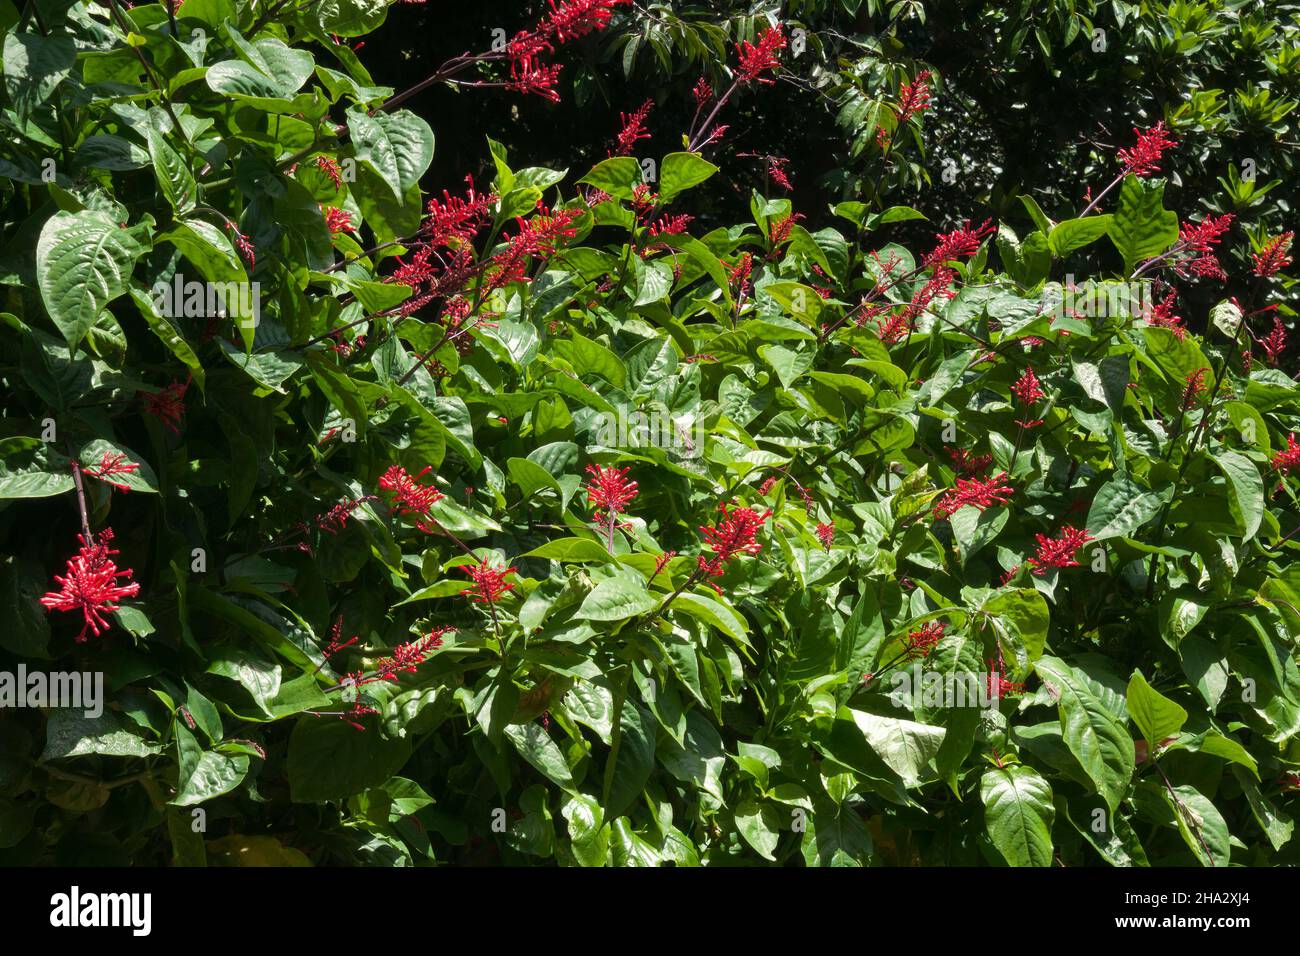 Sydney Australia, odontonema tubaeforme or firespike shrub with red flowers Stock Photo